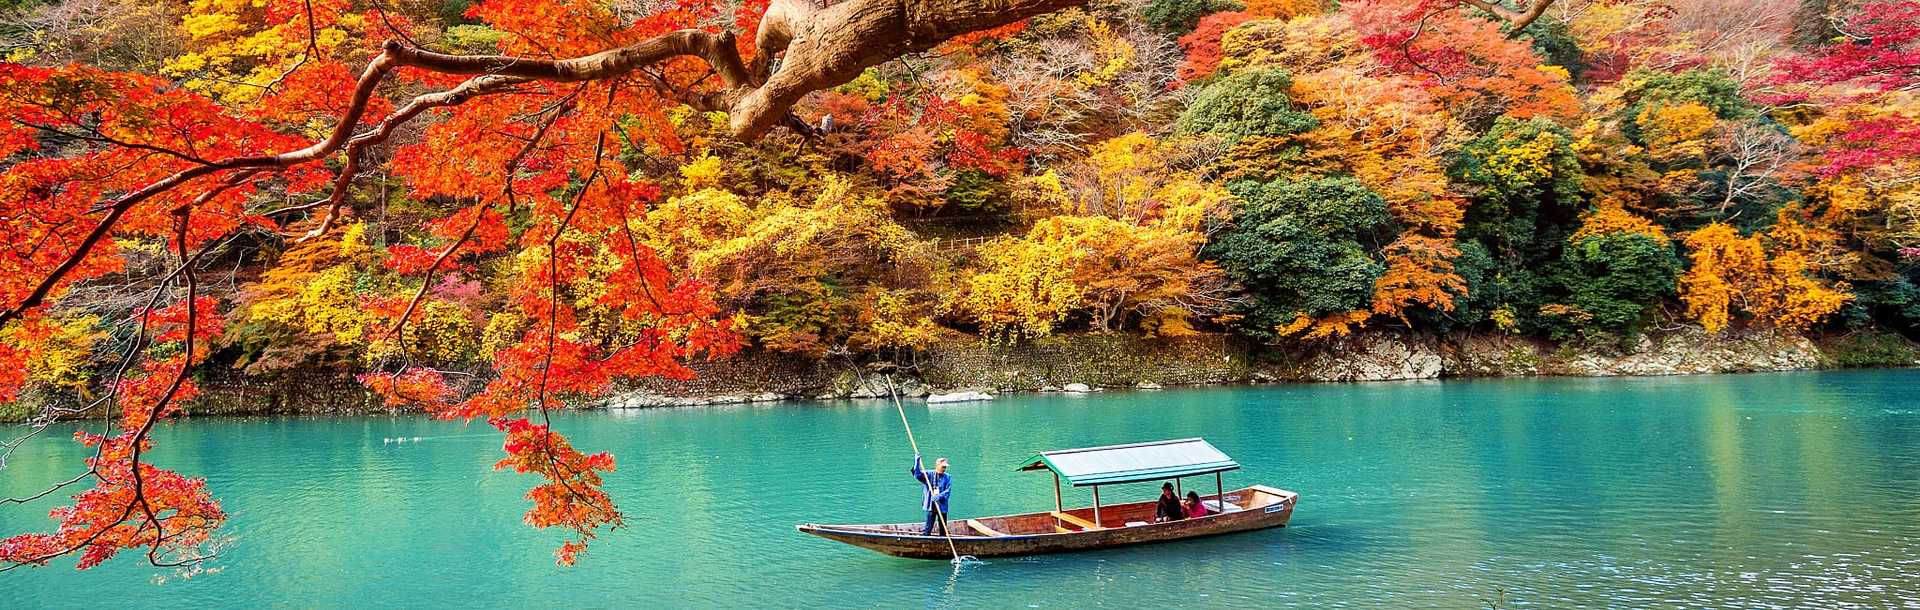 Boatman punting a boat down river in Arashiyama during the autumn season in Kyoto, Japan.